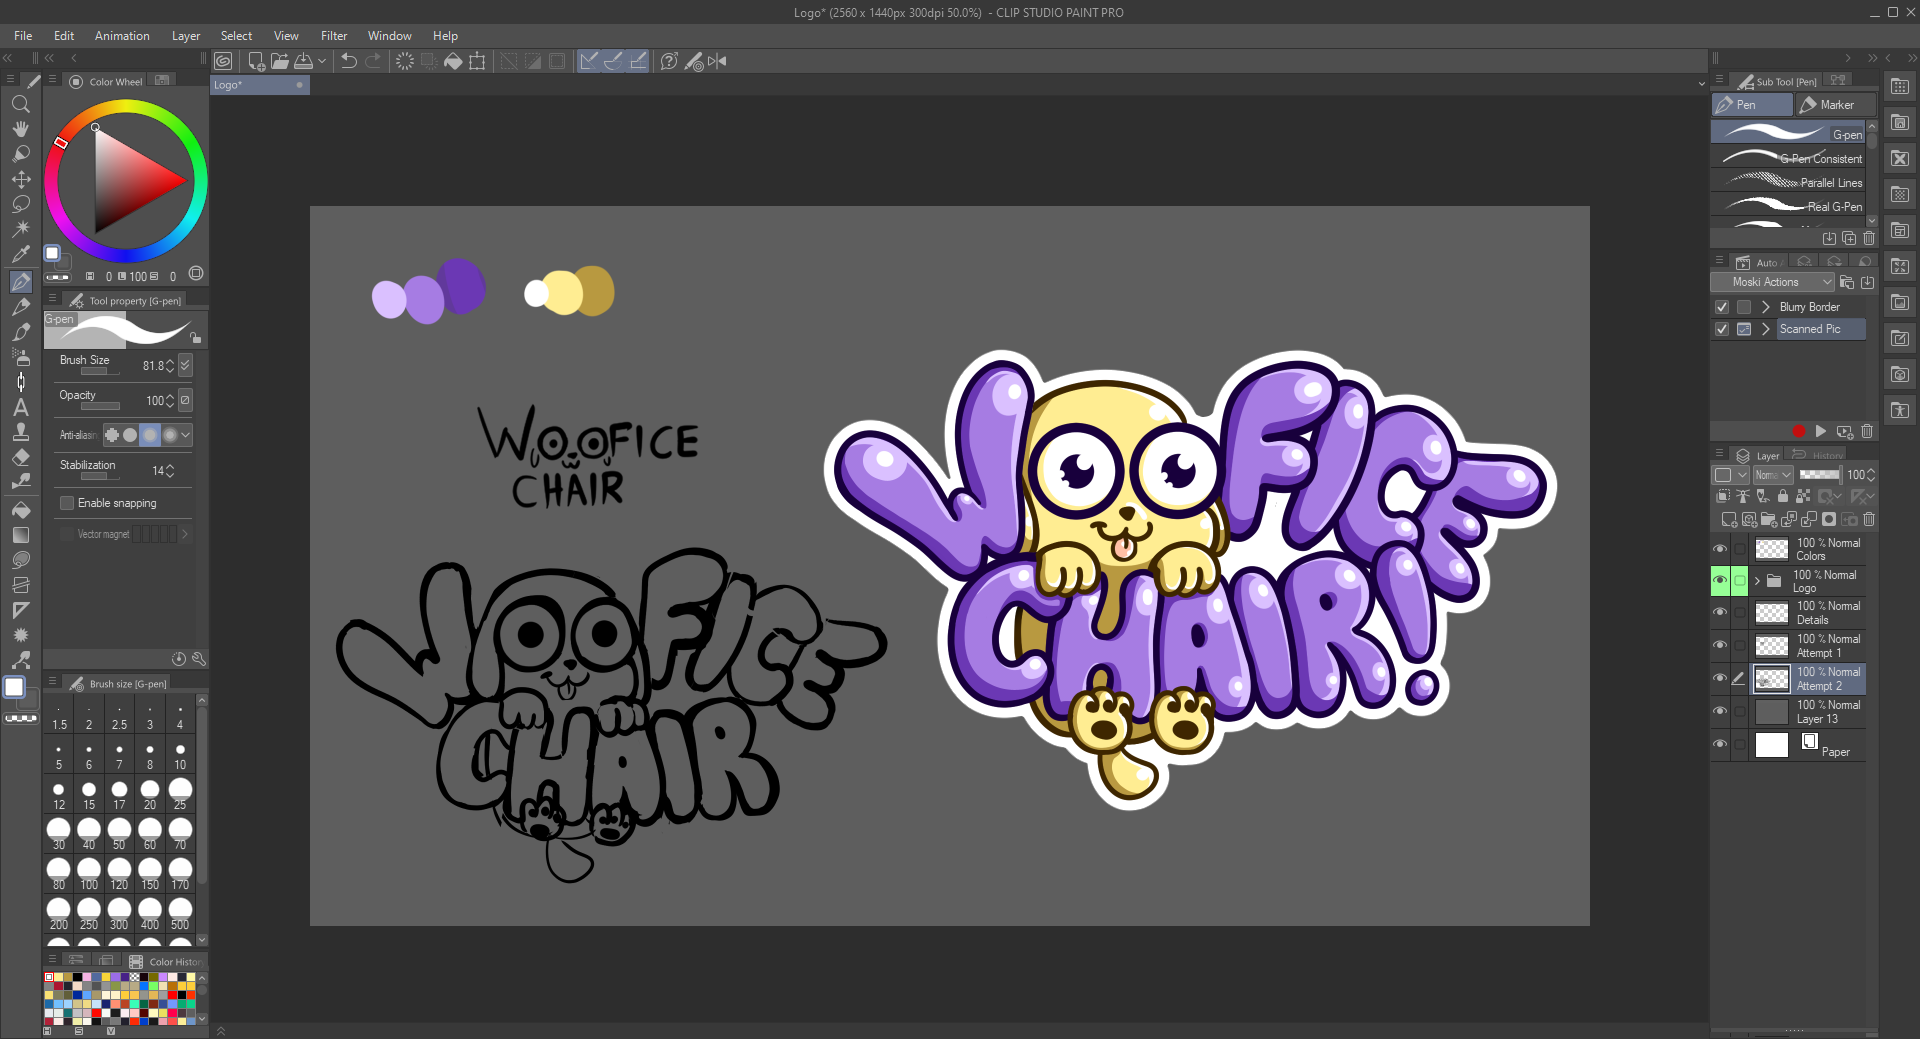 Woofice Chair Logo in Clip Studio Paint